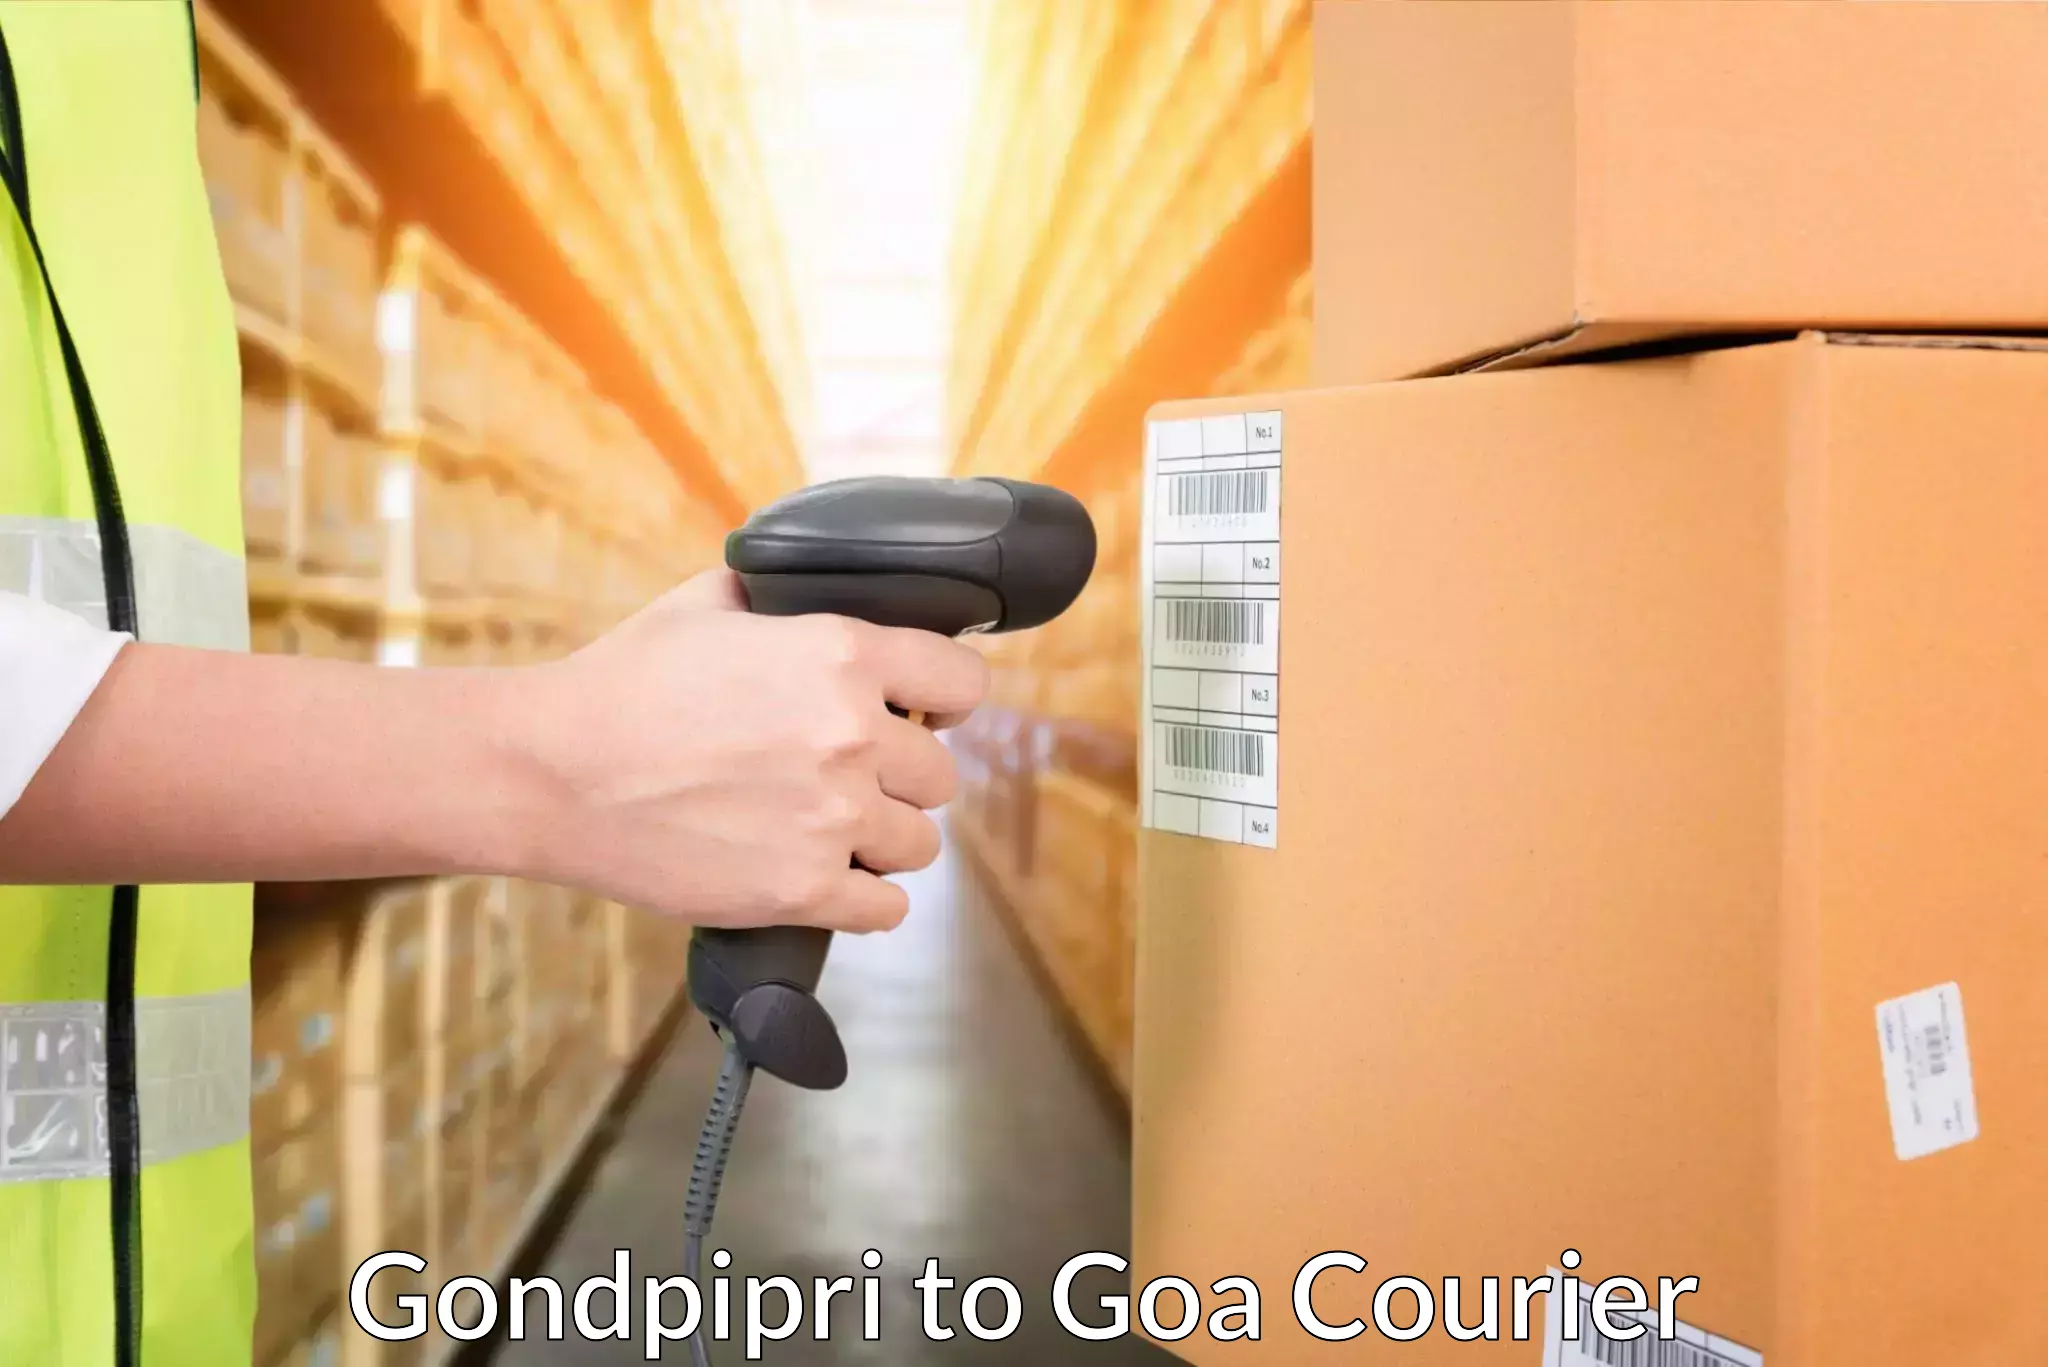 Courier service partnerships Gondpipri to Goa